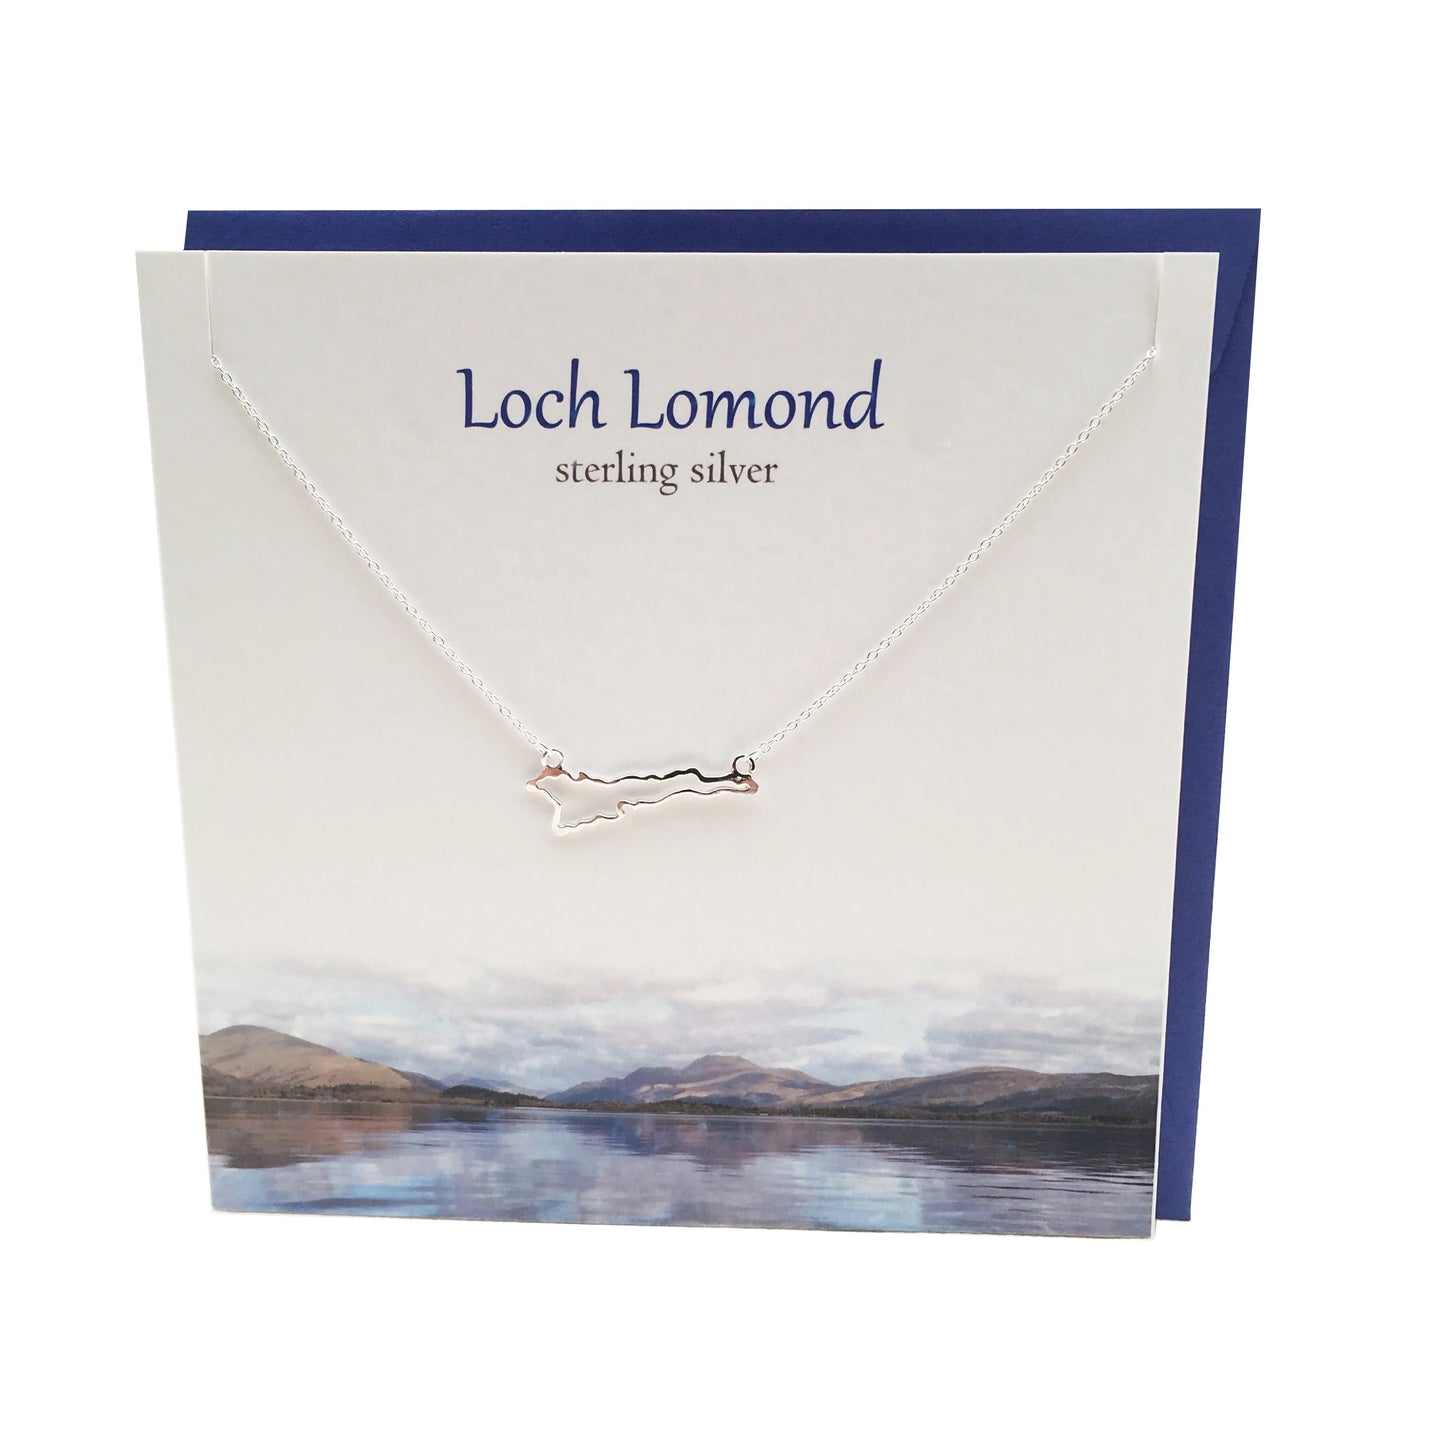 Loch Lomond sterling silver necklace